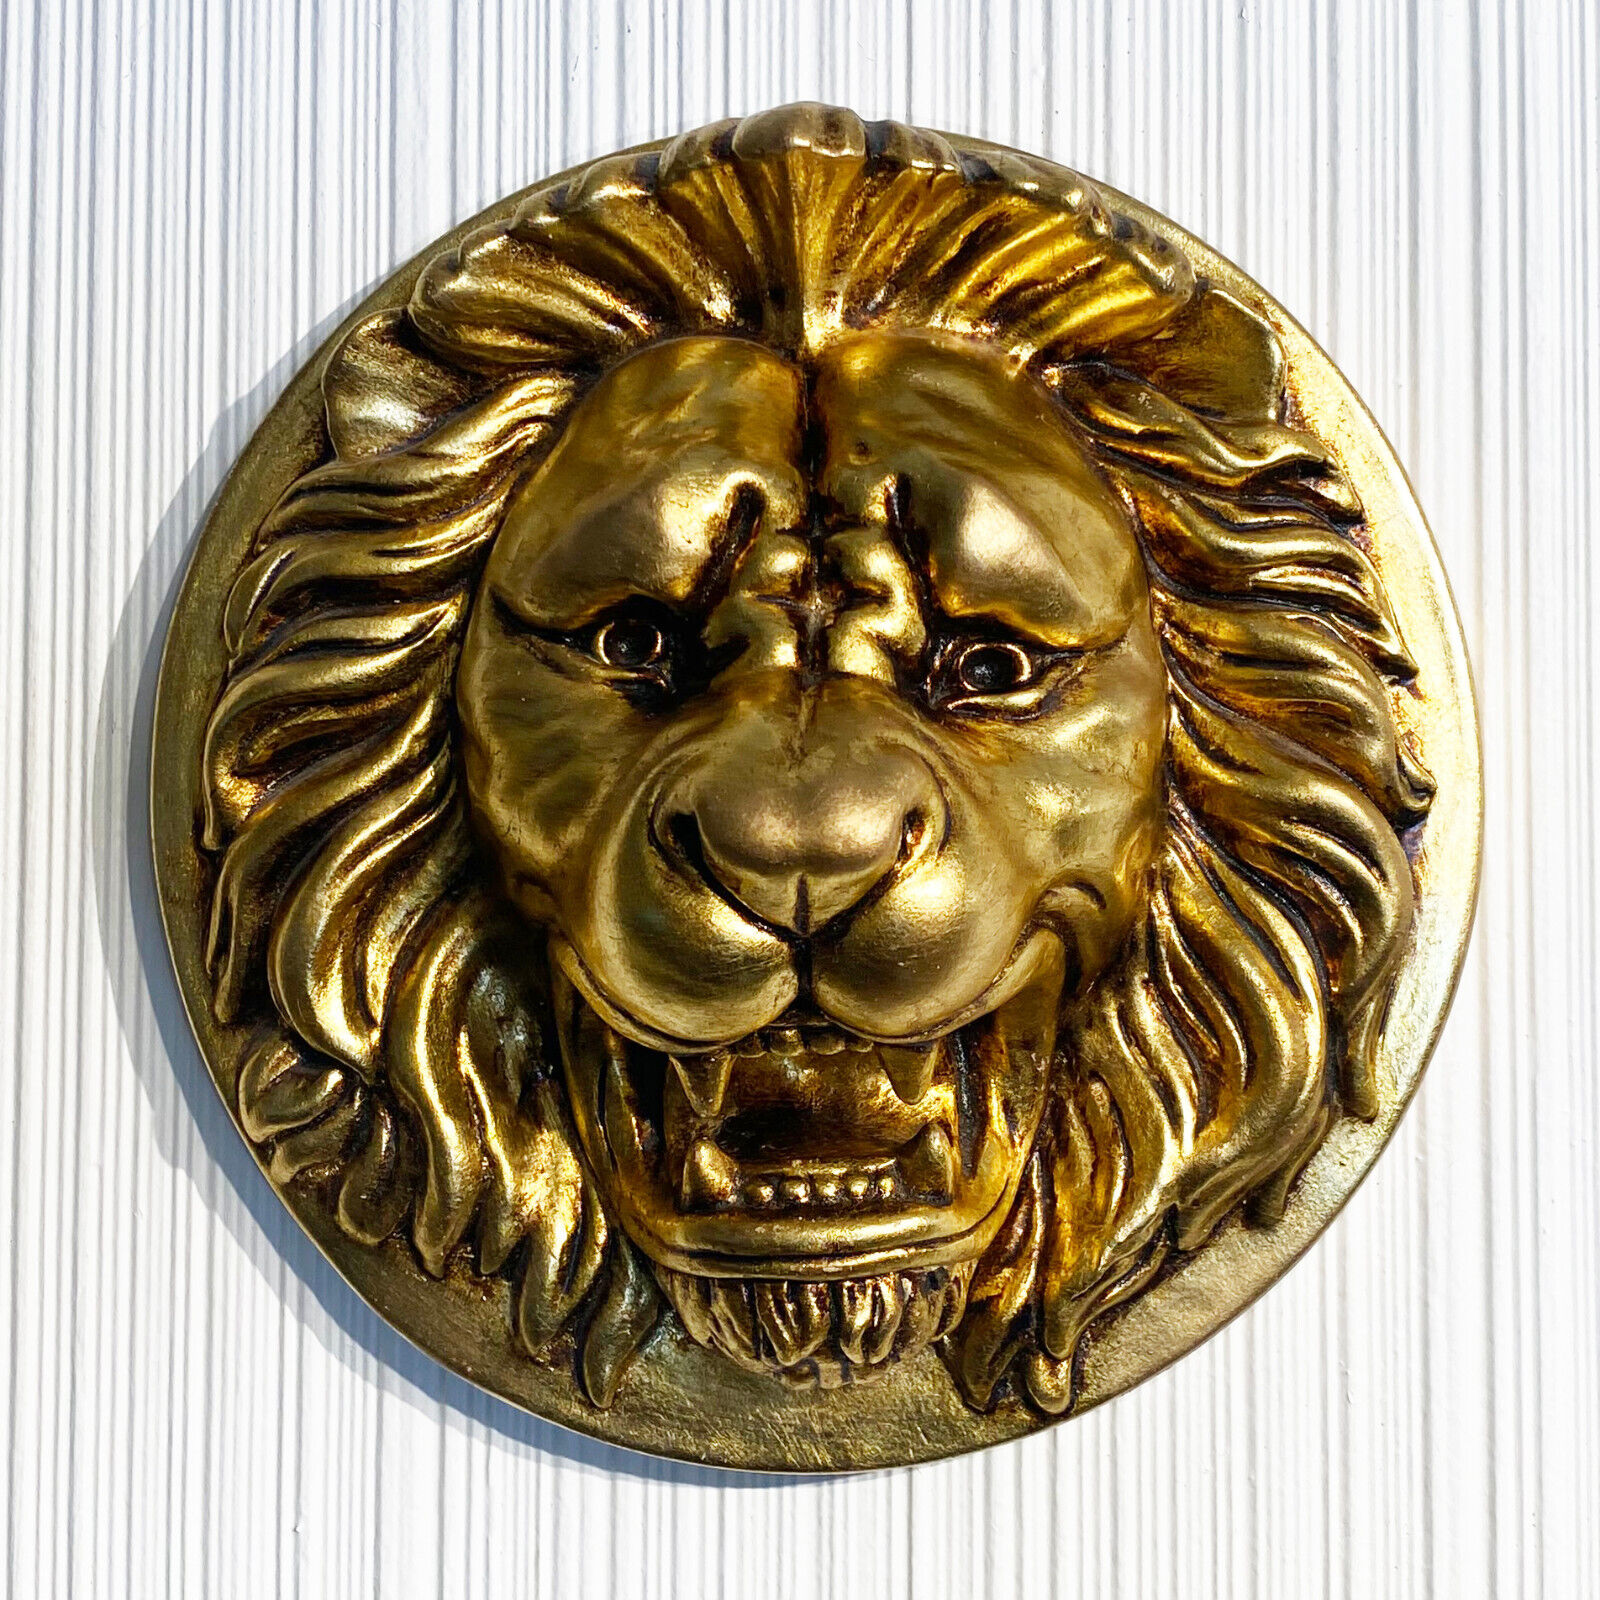 LA GIOIA Vintage Venetian Lion Wall Hanging Plaque Gold Leaf Sculpture Art Mask